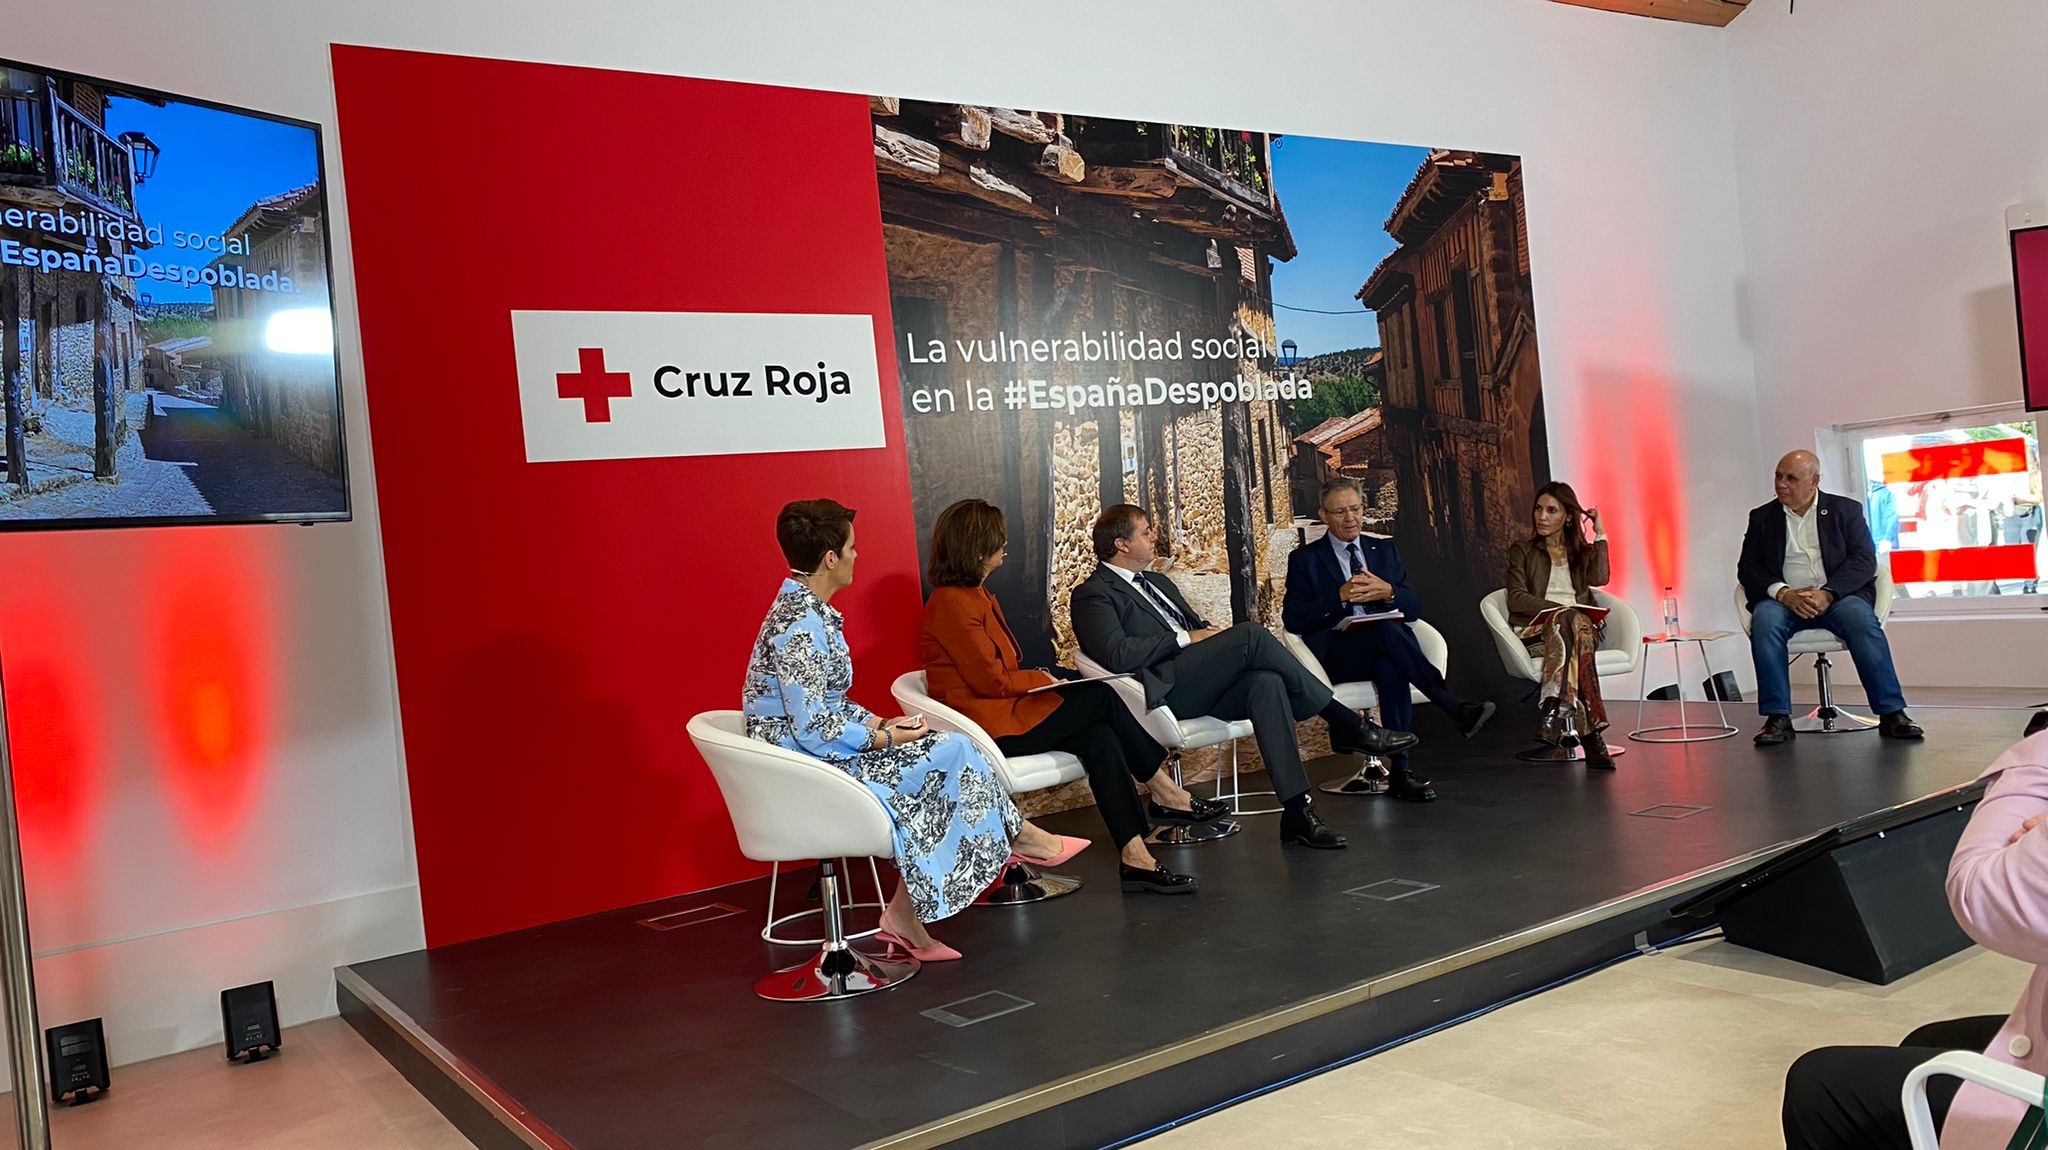 Cruz Roja España Despoblada